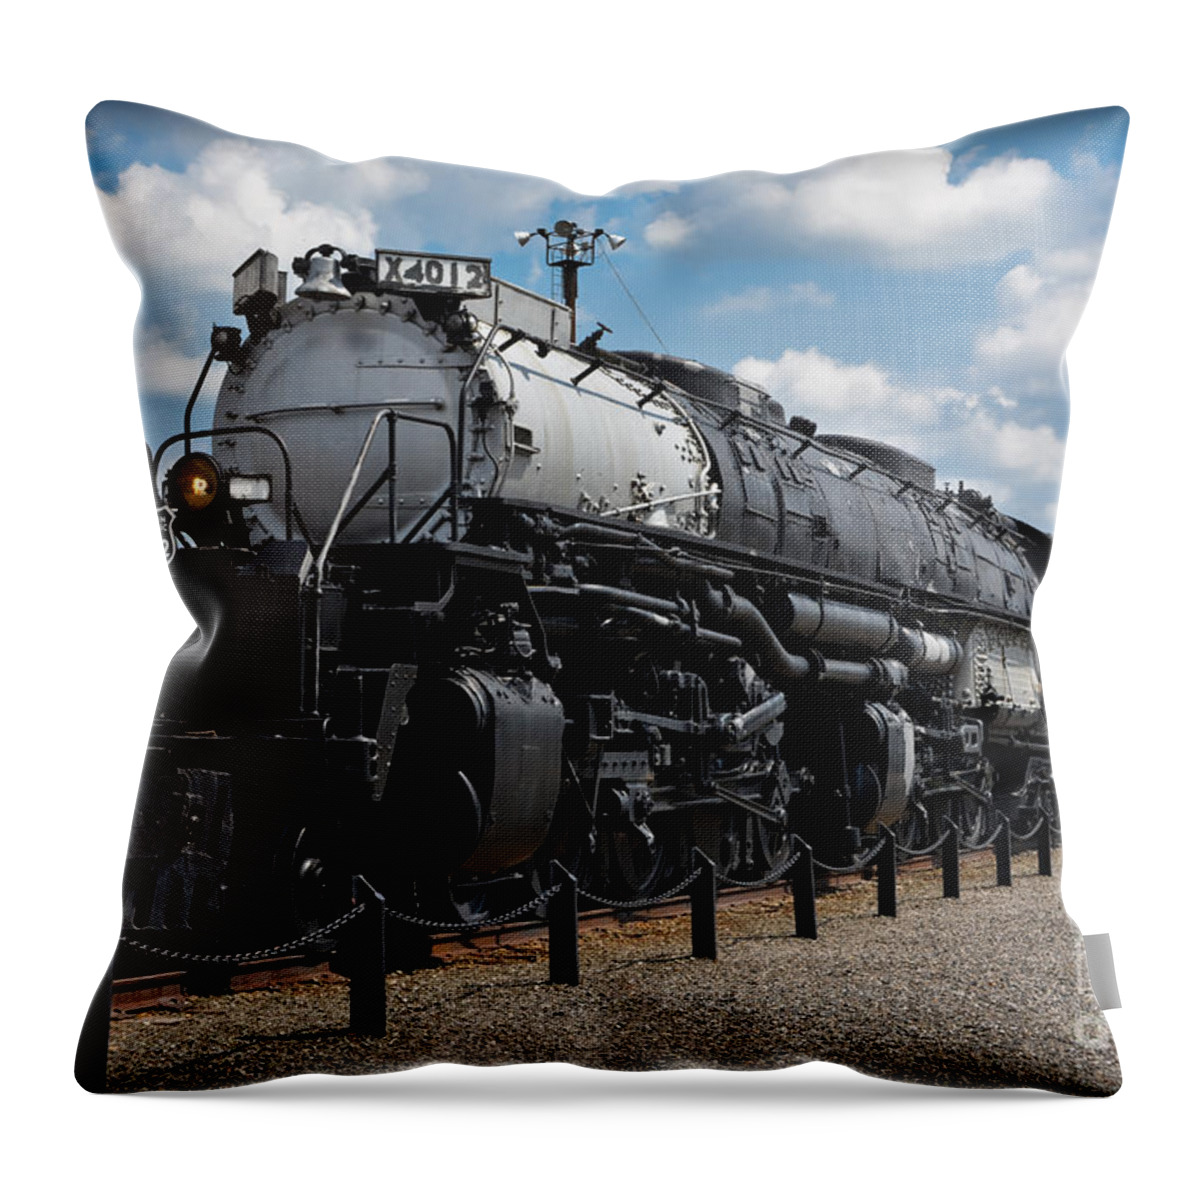 Locomotive Throw Pillow featuring the photograph 4-8-8-4 Big Boy Locomotive by Gary Keesler